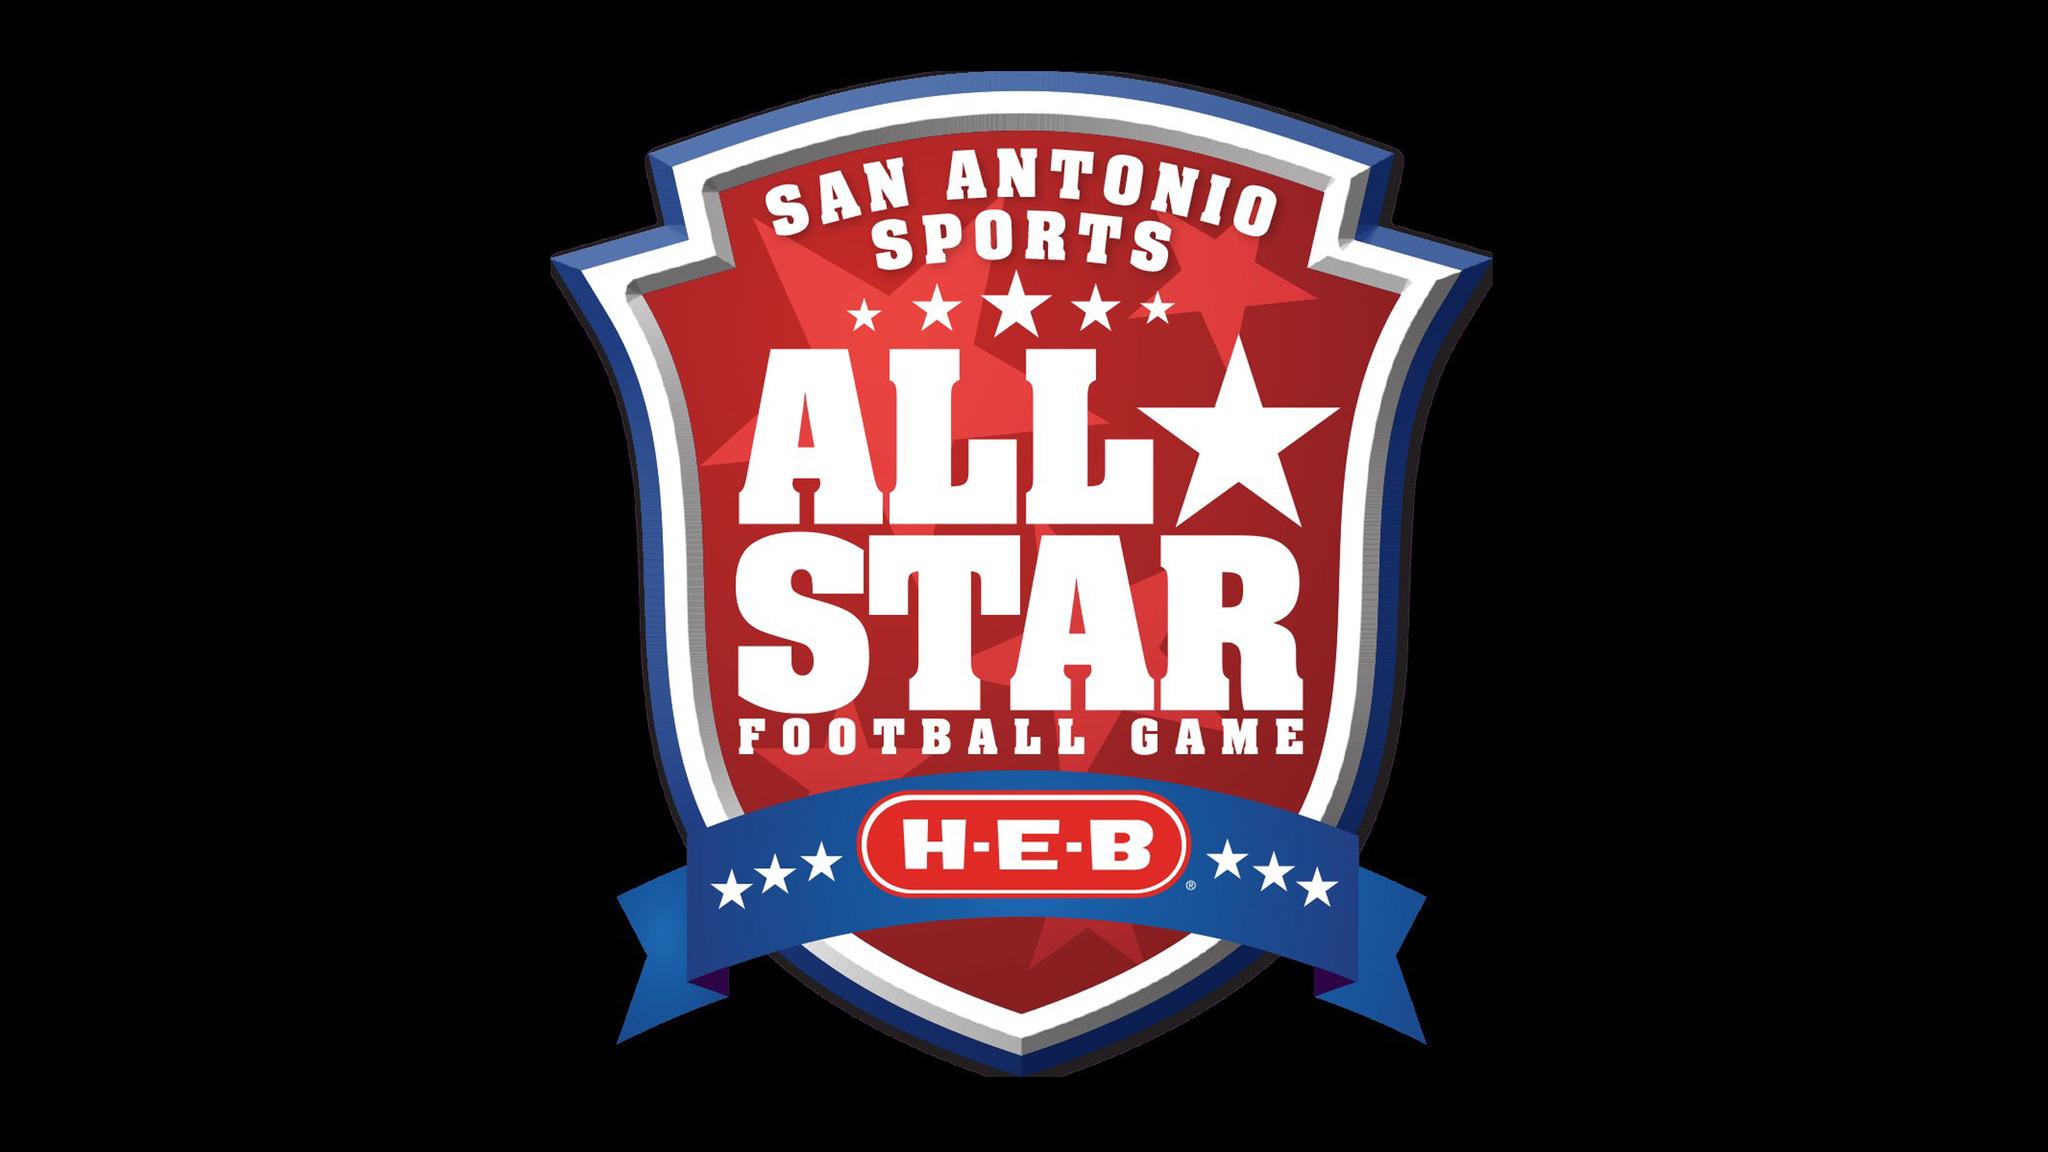 San Antonio Sports All-Star Football Game Billets | Billets de match